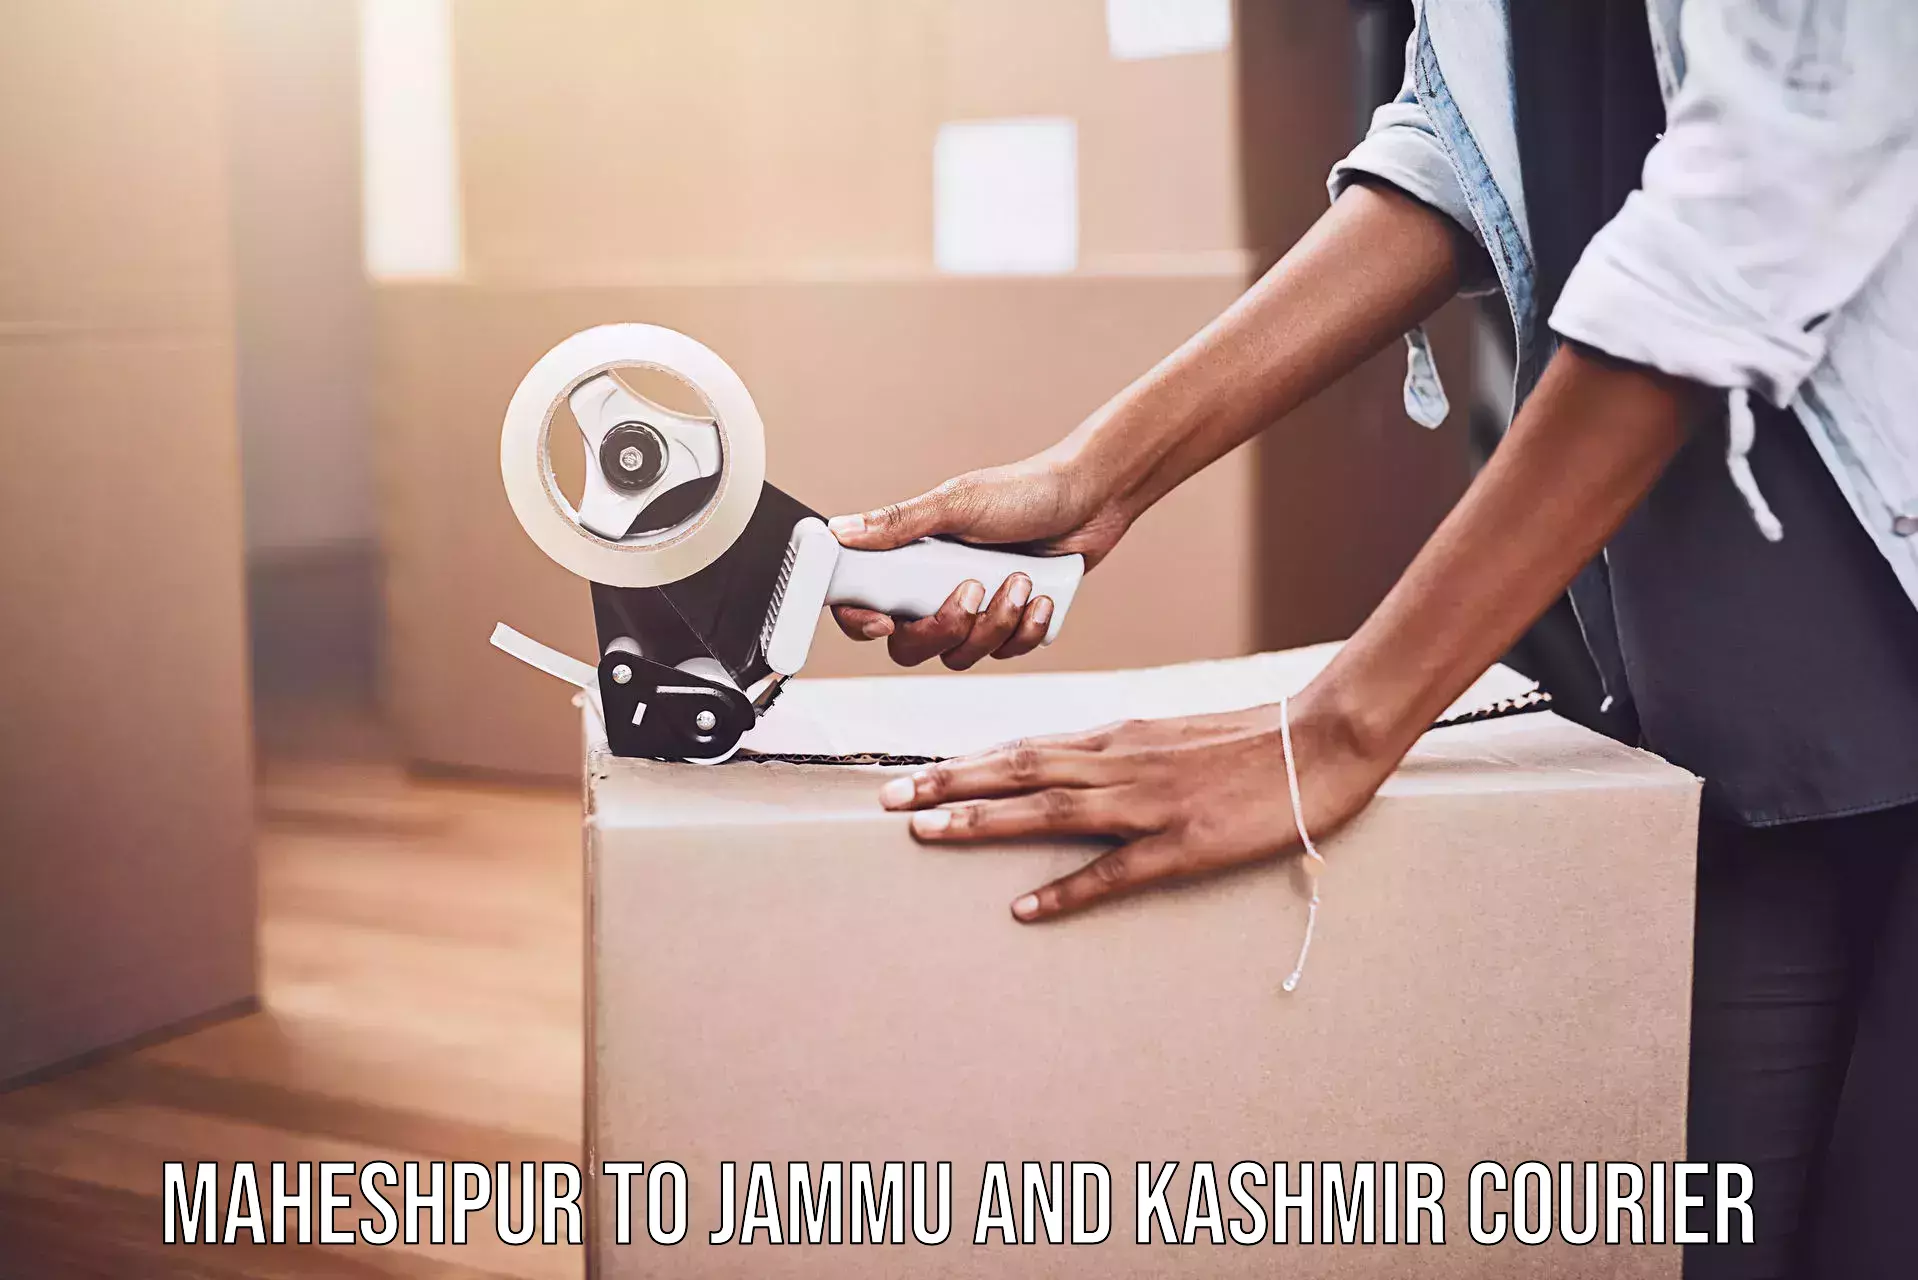 Express delivery capabilities Maheshpur to Shopian